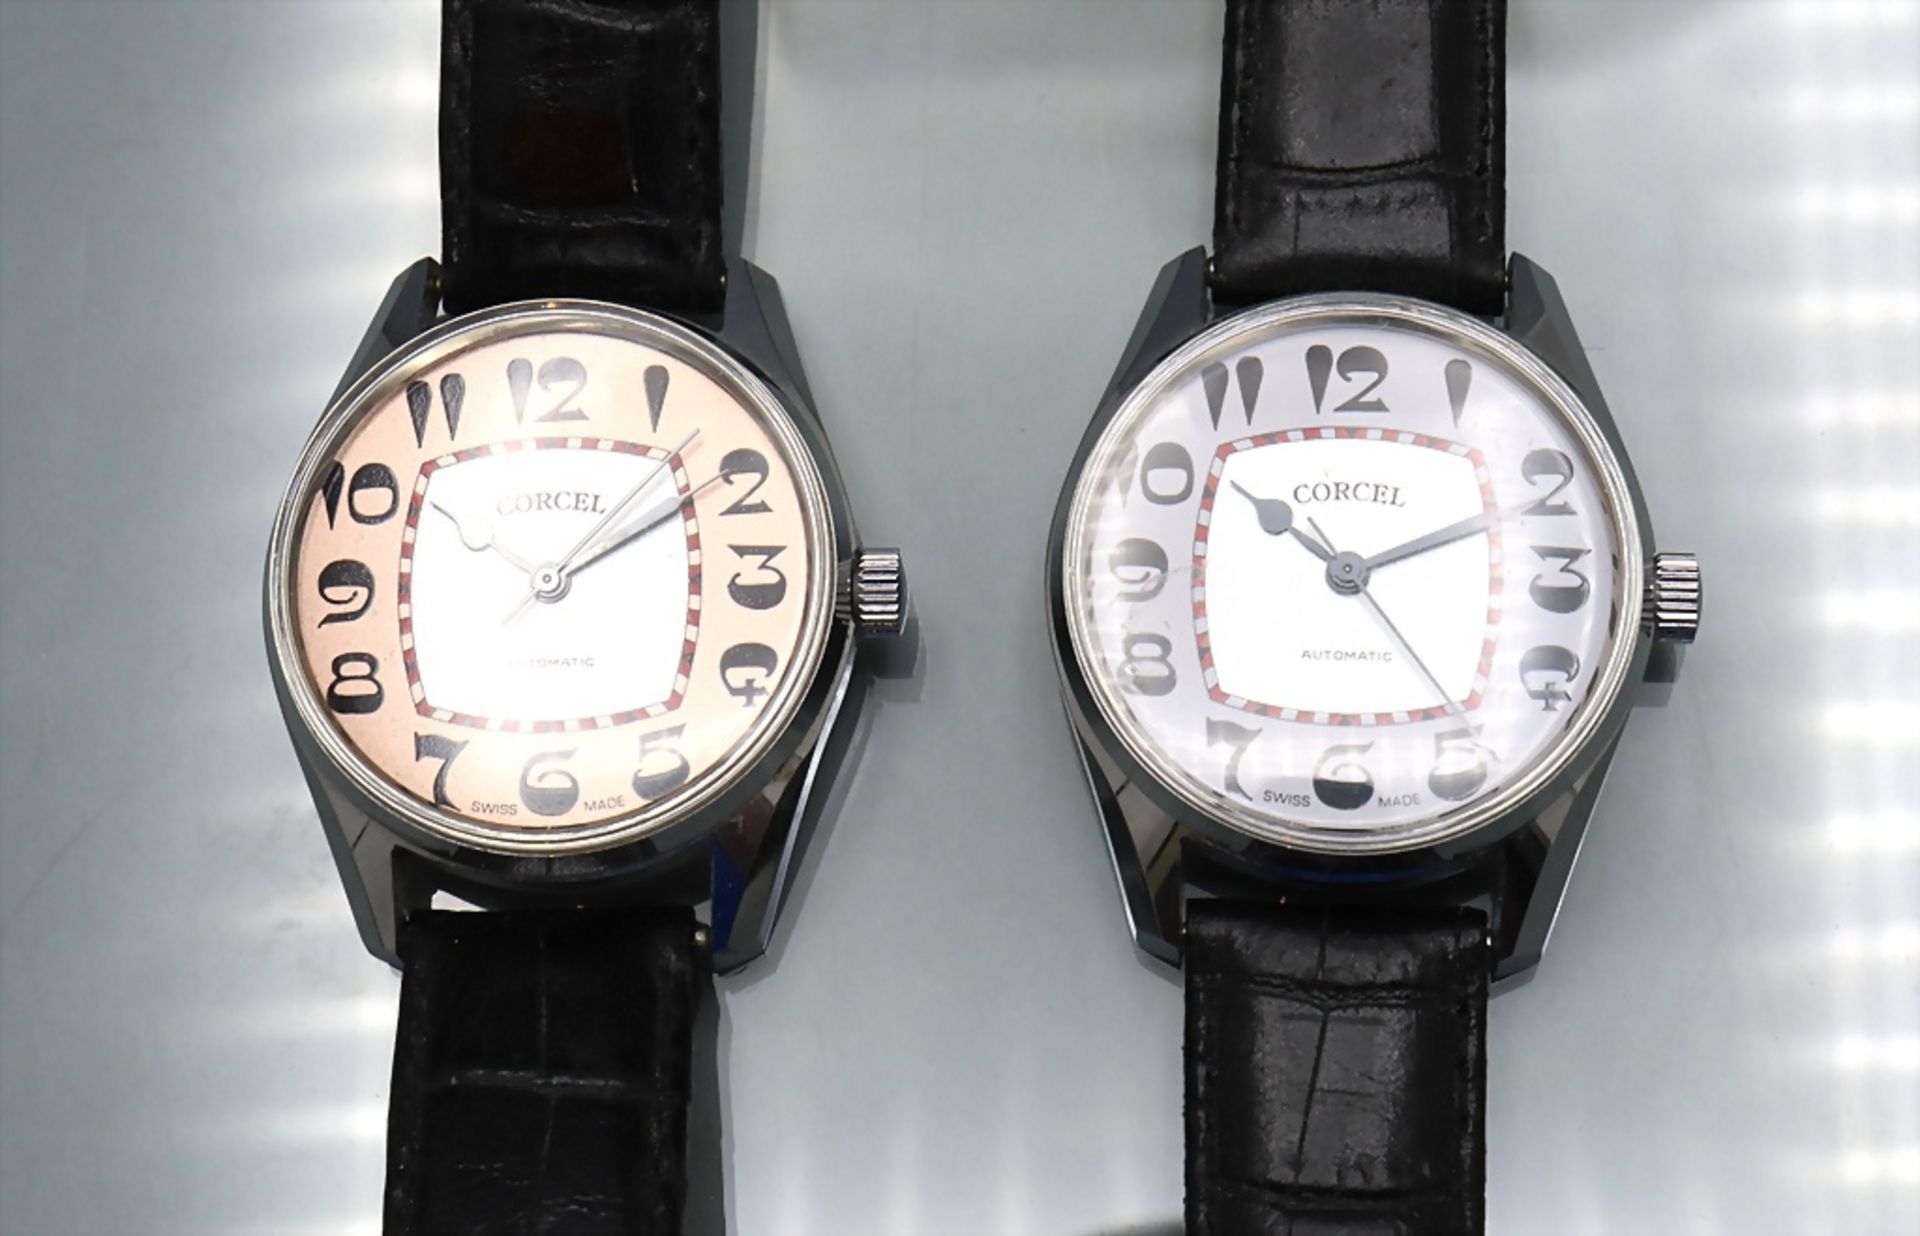 Zwei Herrenarmbanduhren / Two men's wristwatches, Corcel - Image 7 of 7